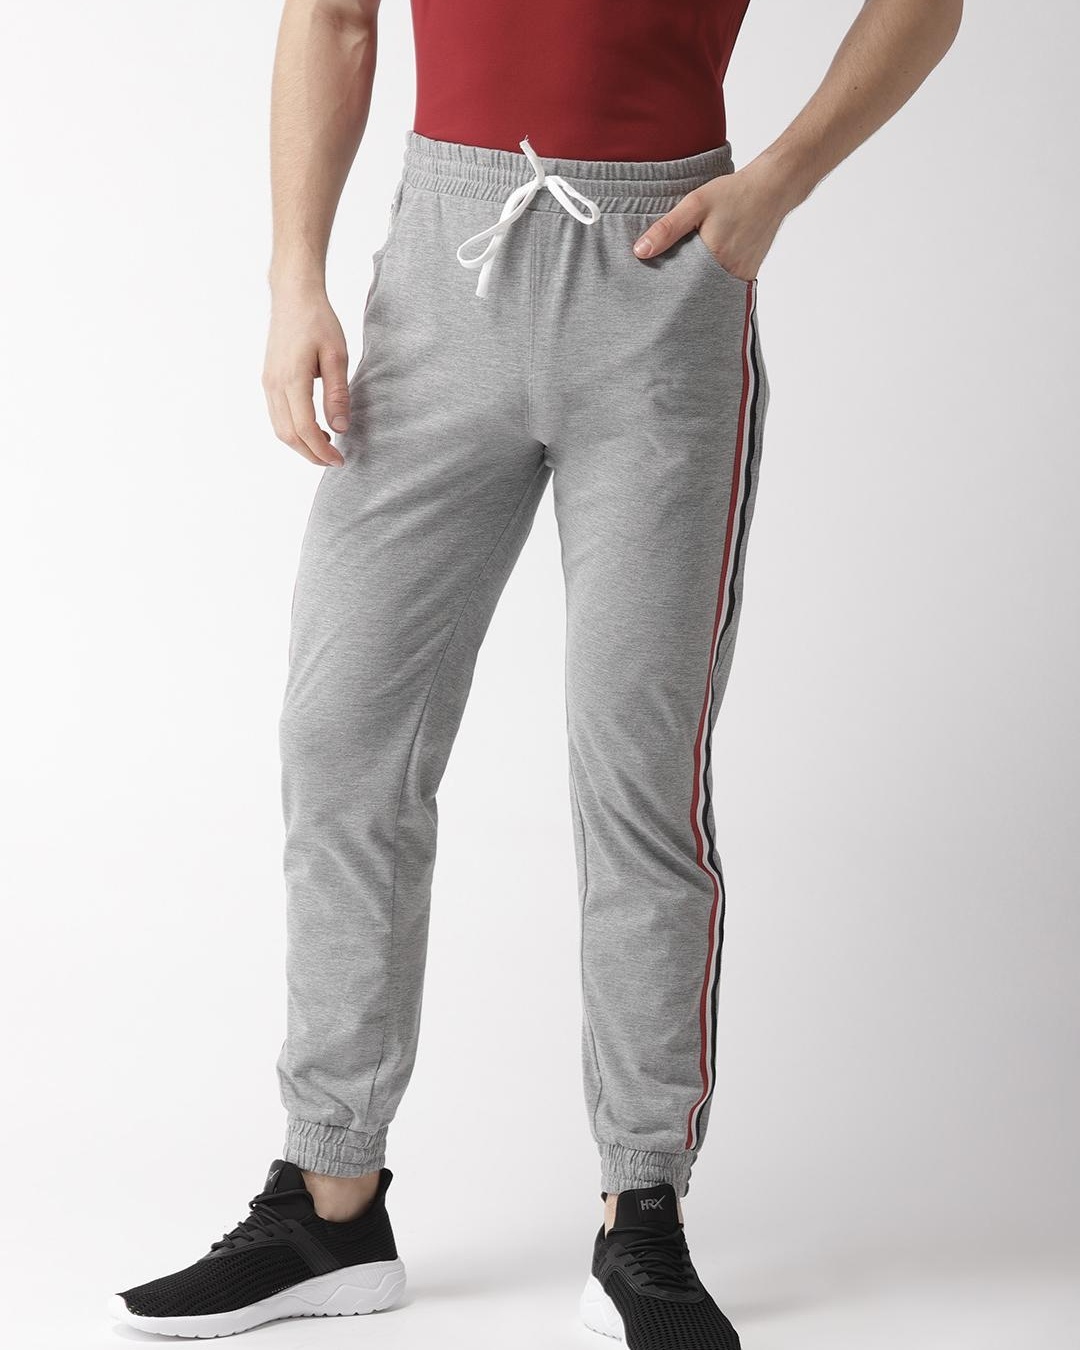 Buy Men's Grey Side Striped Joggers for Men Grey Online at Bewakoof